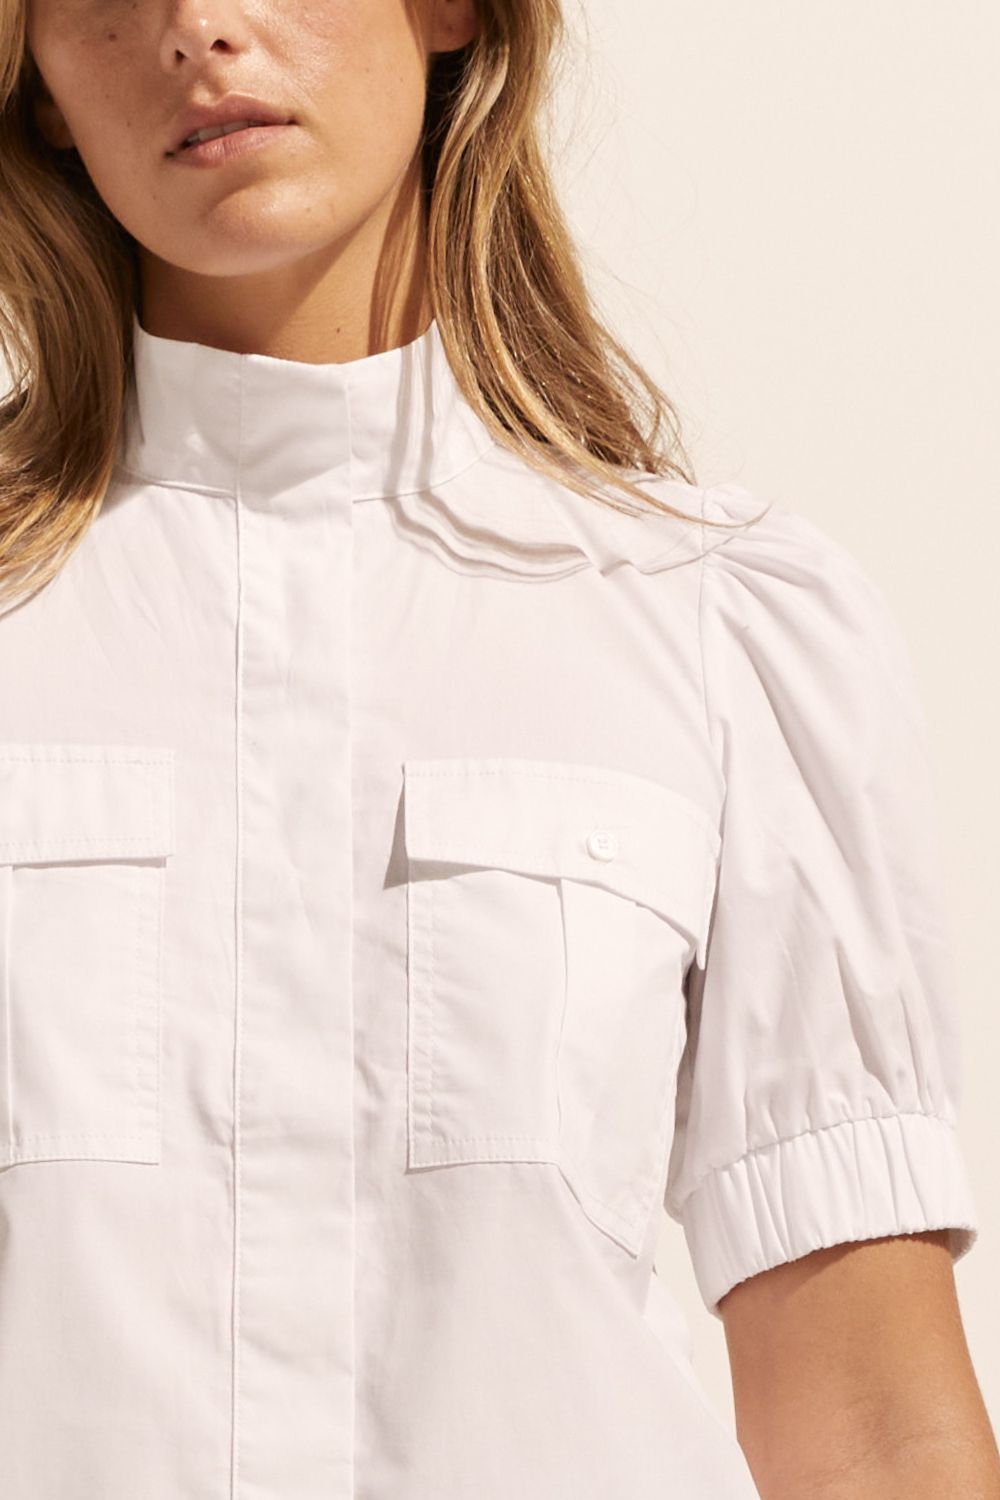 white, high neck, button up shirt, top, close up view